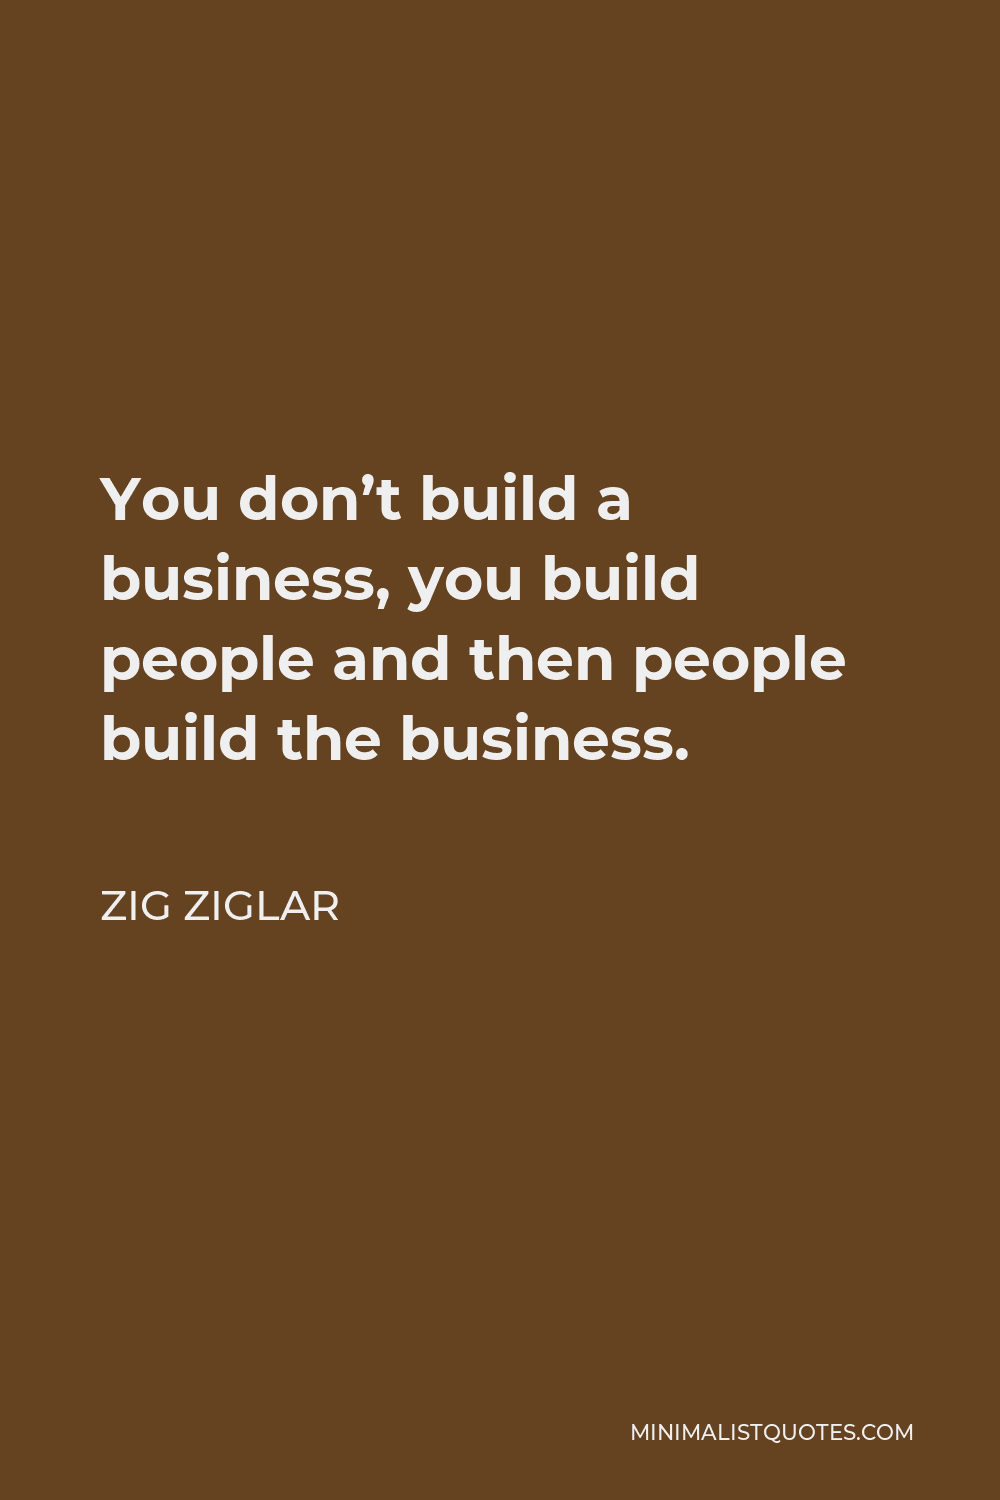 Zig Ziglar Quote - You don’t build a business, you build people and then people build the business.